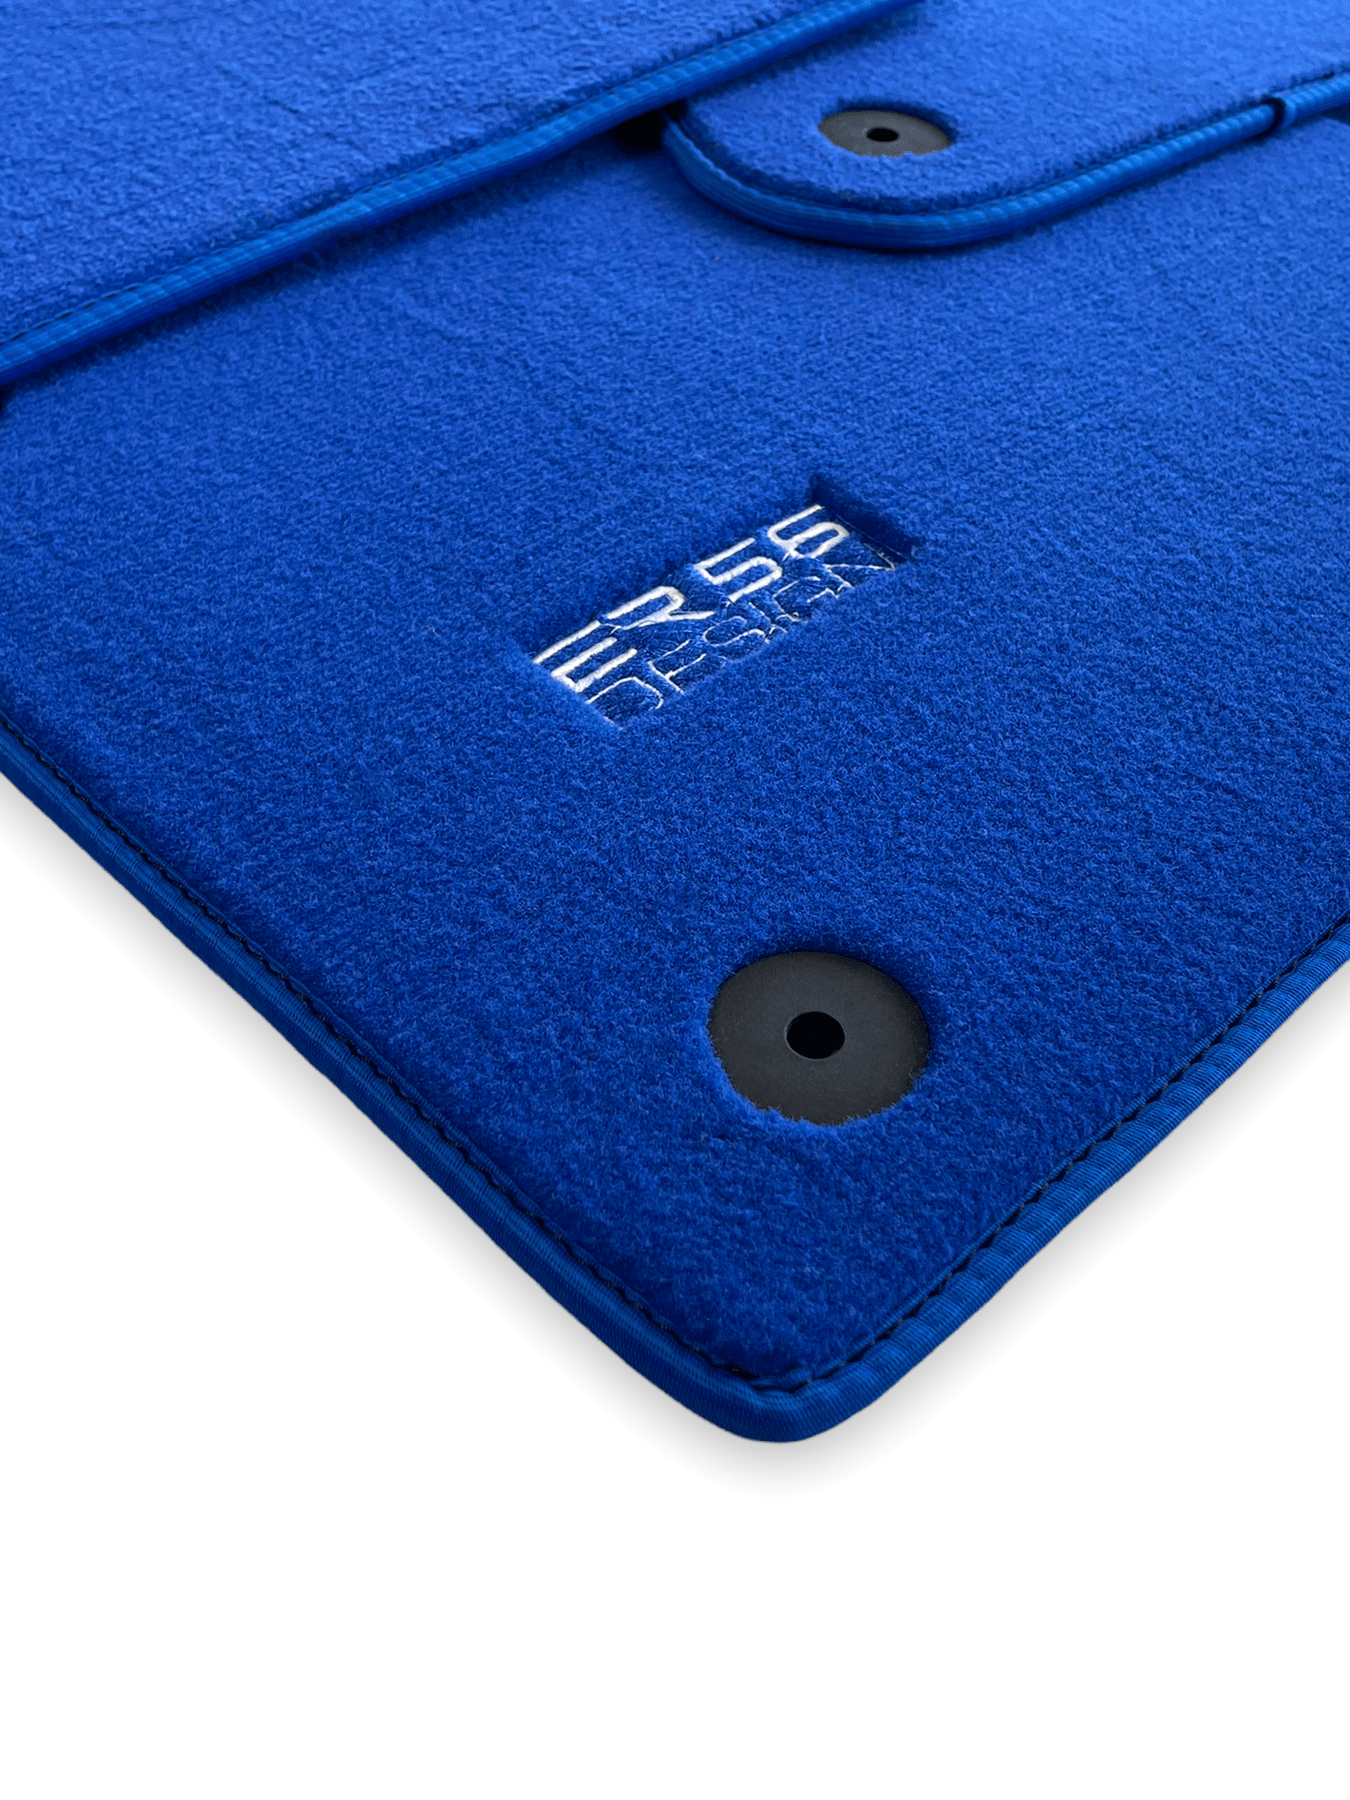 Blue Floor Mats for Audi A8 D5 (2017-2023) | ER56 Design